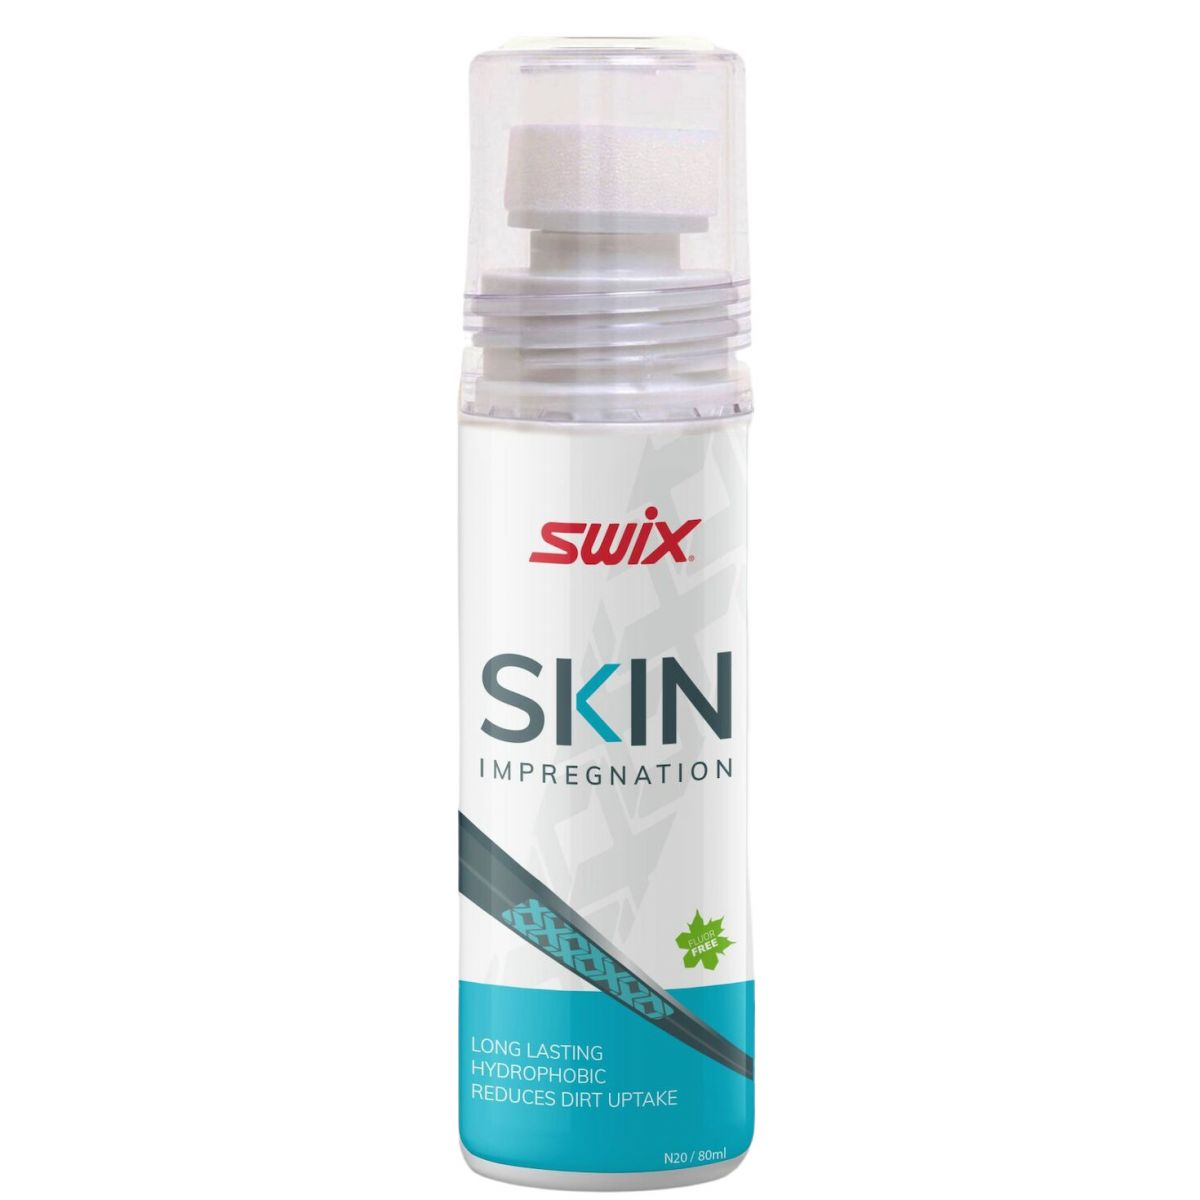 Se Swix Skin Impregnation, cleaner, 80ml hos AktivVinter.dk